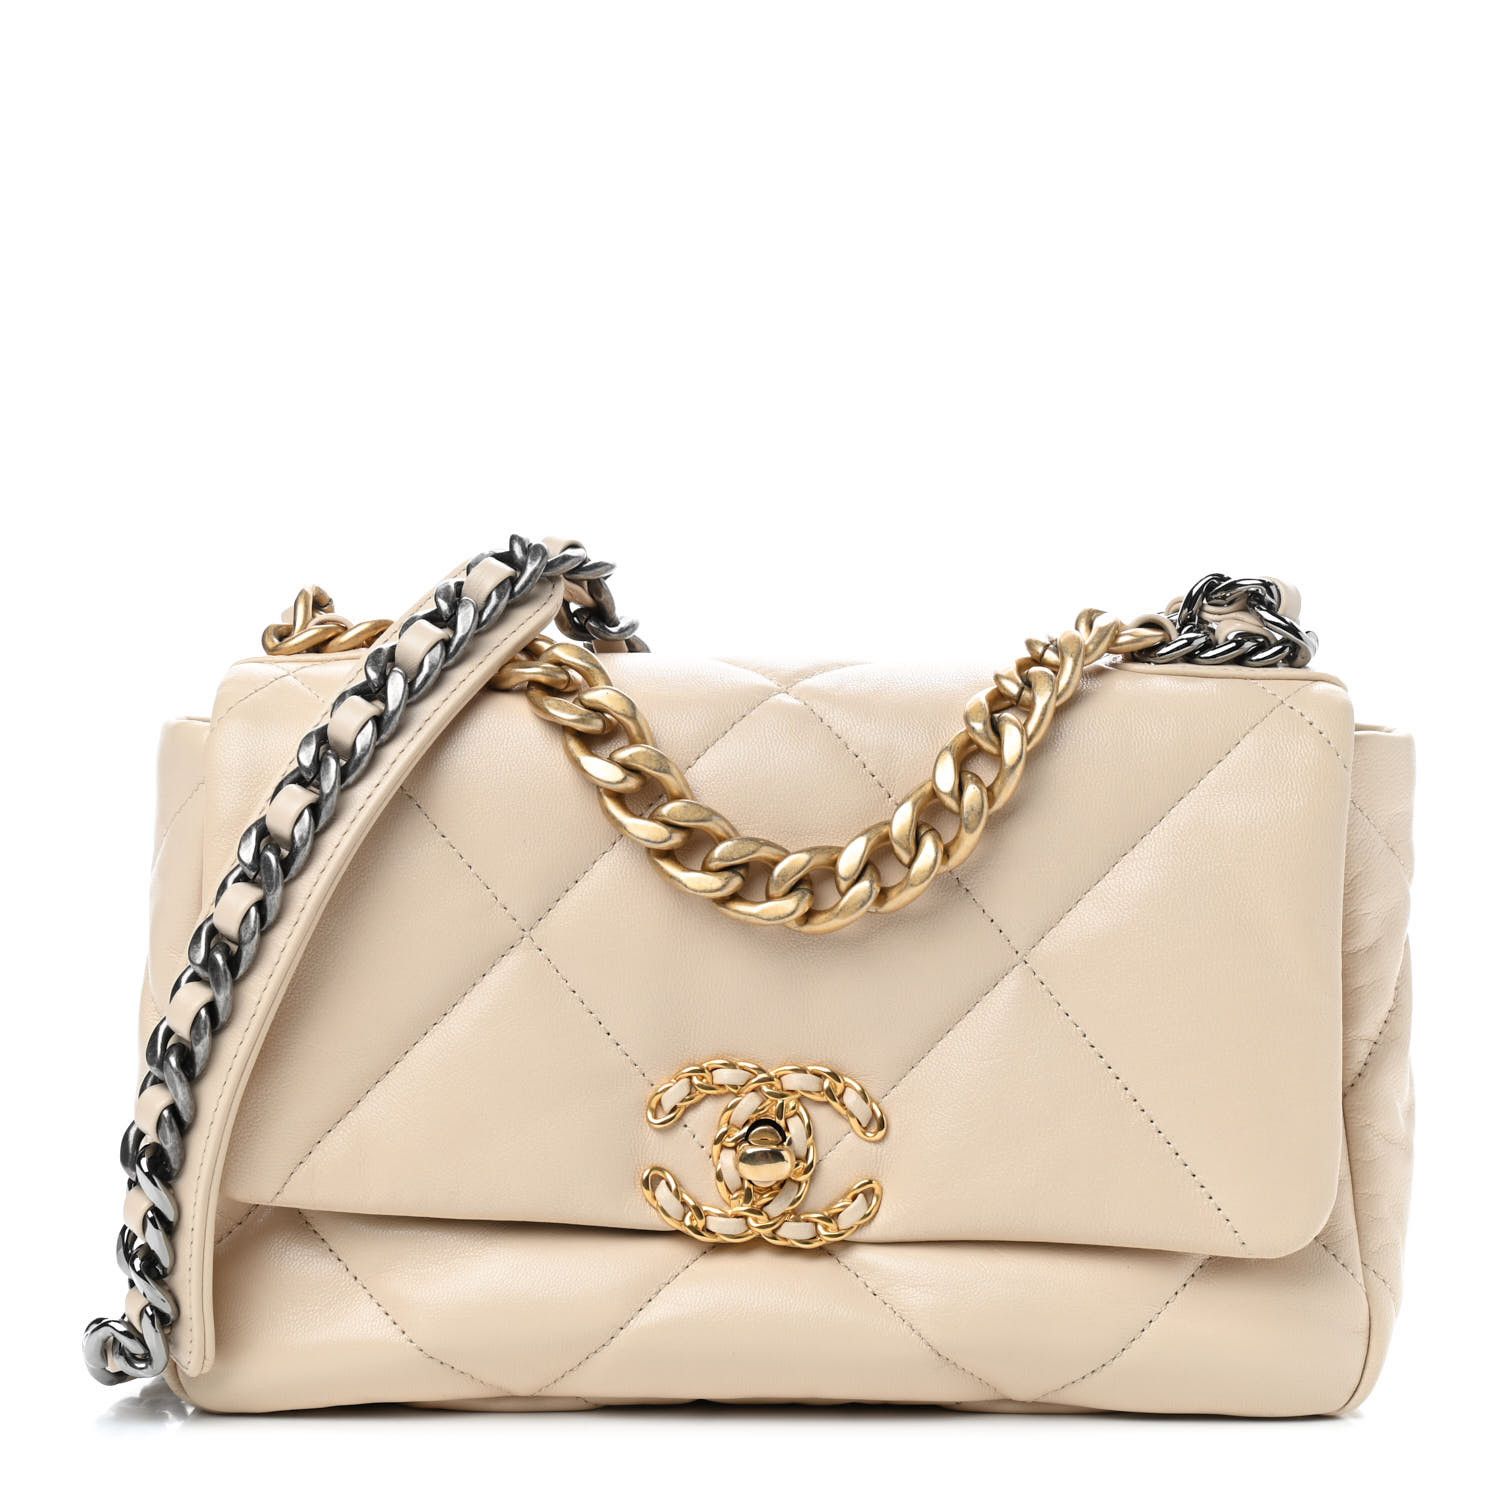 CHANEL

Goatskin Quilted Medium Chanel 19 Flap Beige | Fashionphile